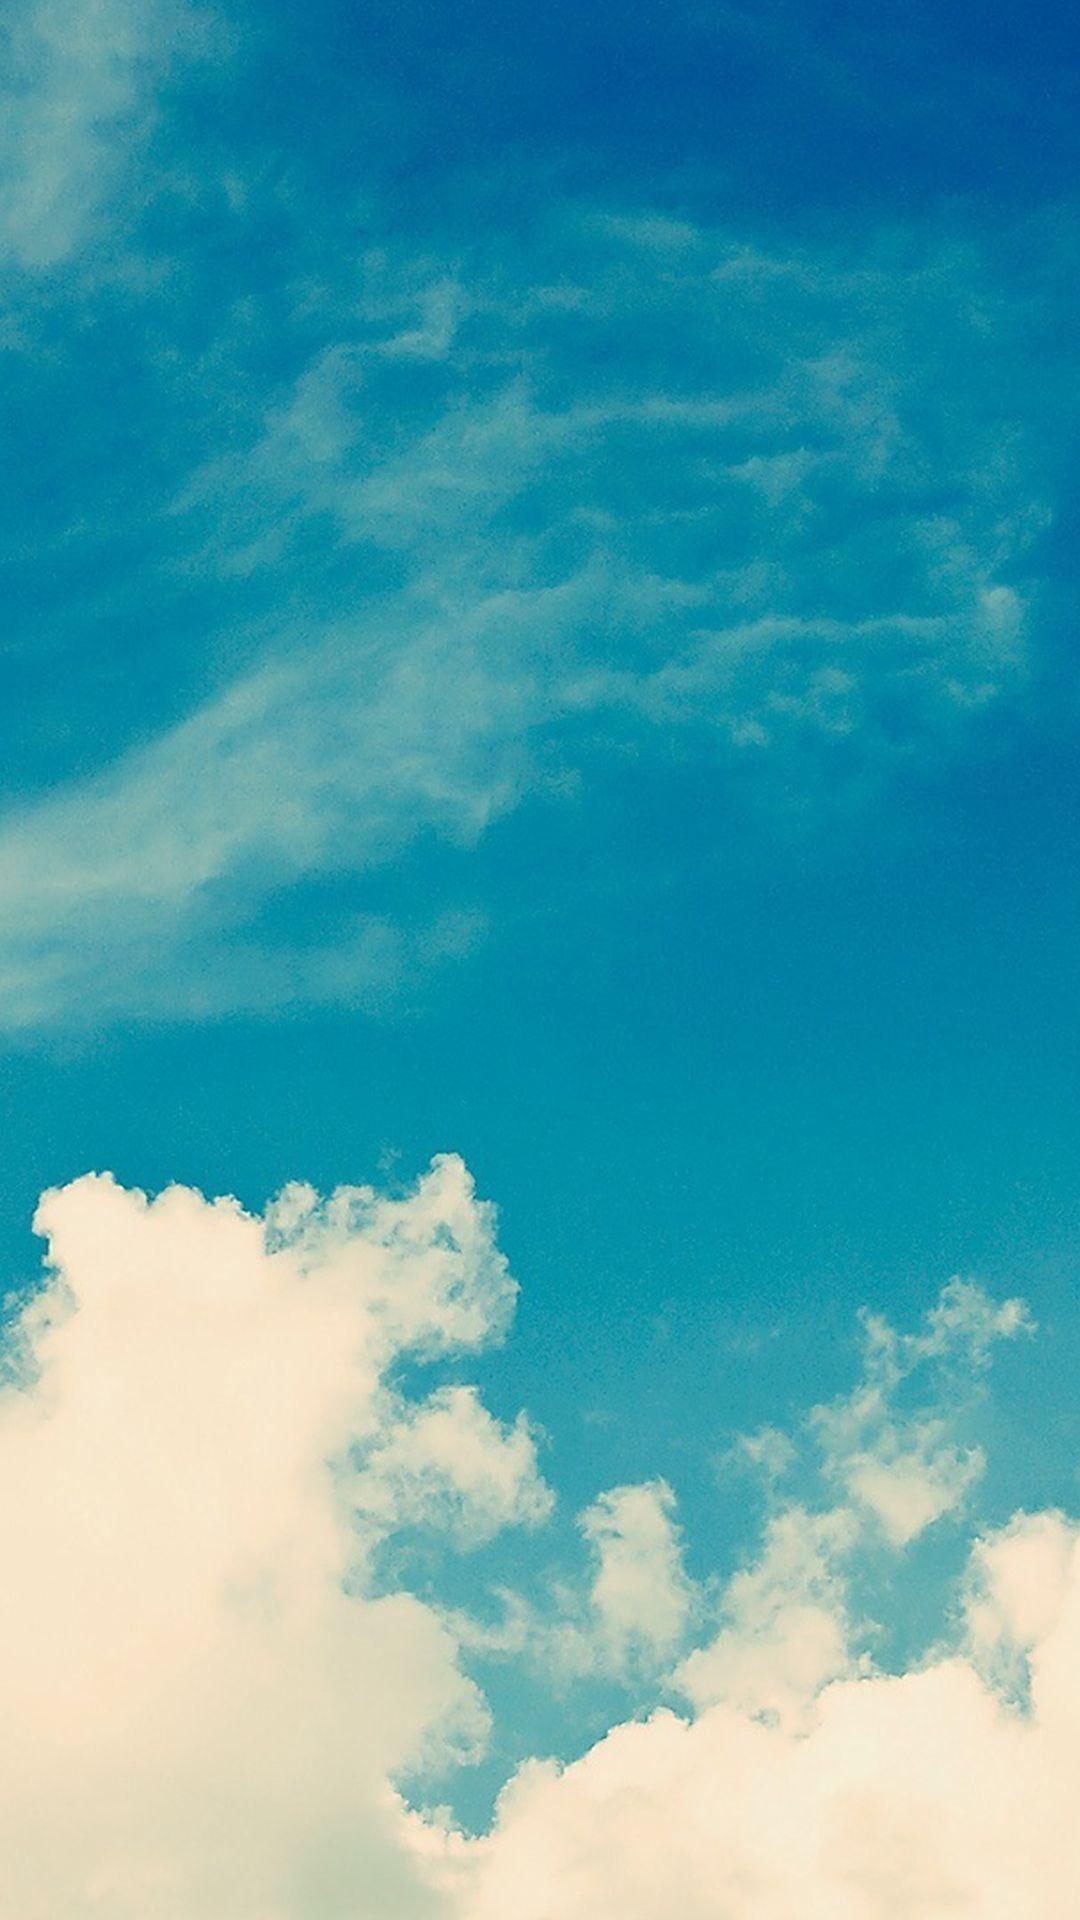 White Vintage Clouds Blu Sky iPhone 6 Plus HD Wallpaper. Image